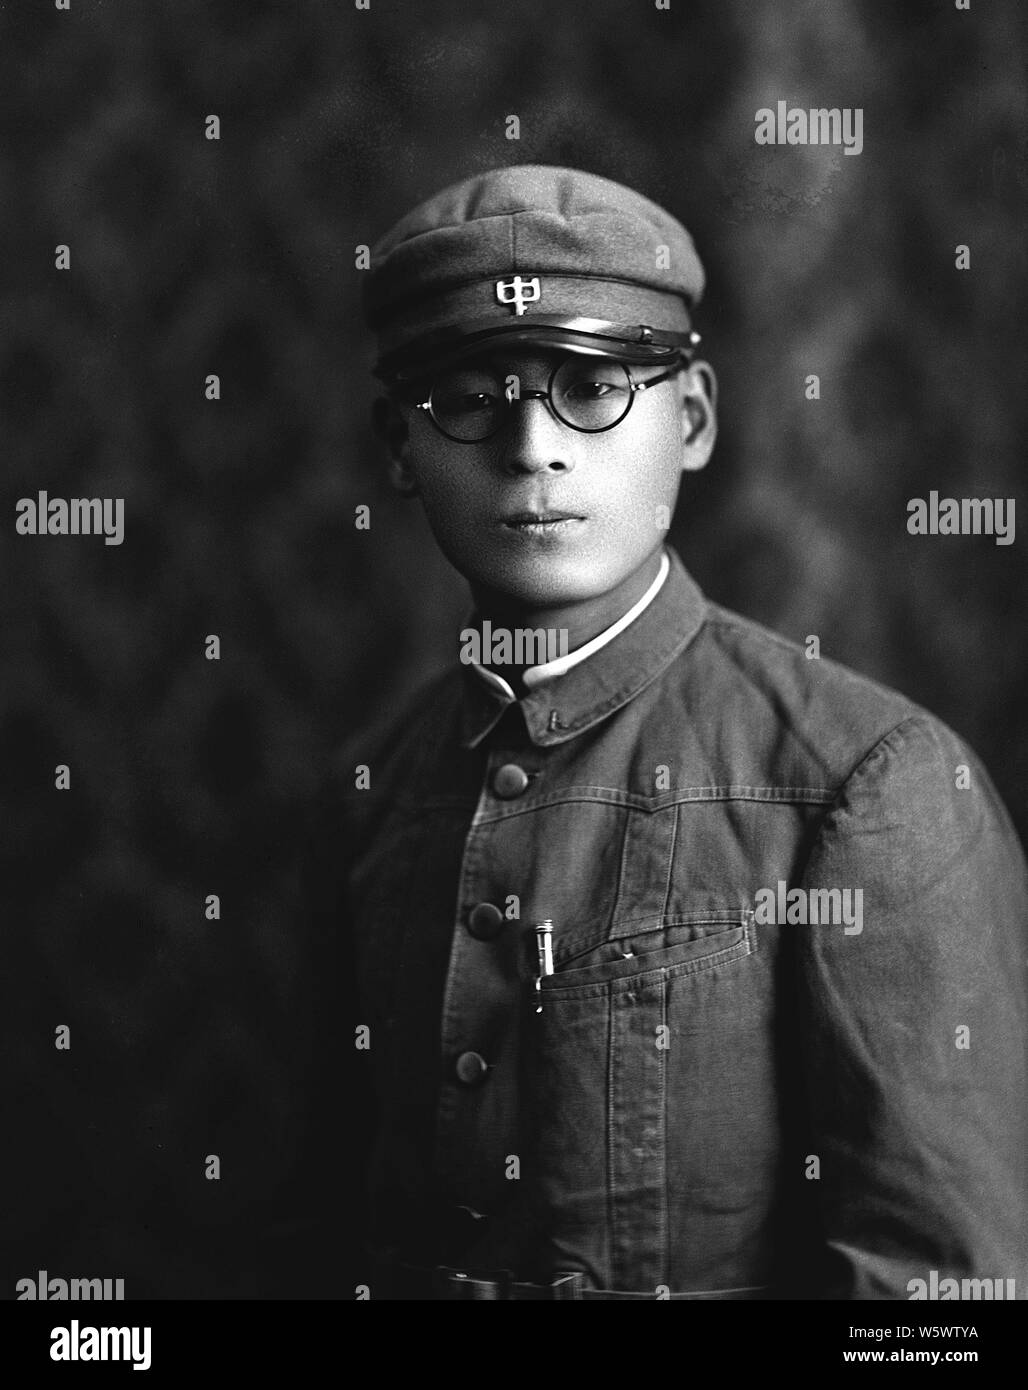 [ 1930s Japan - Portrait of Japanese Middle School Student in Uniform ] —   Middle school student in uniform.  20th century vintage glass negative. Stock Photo